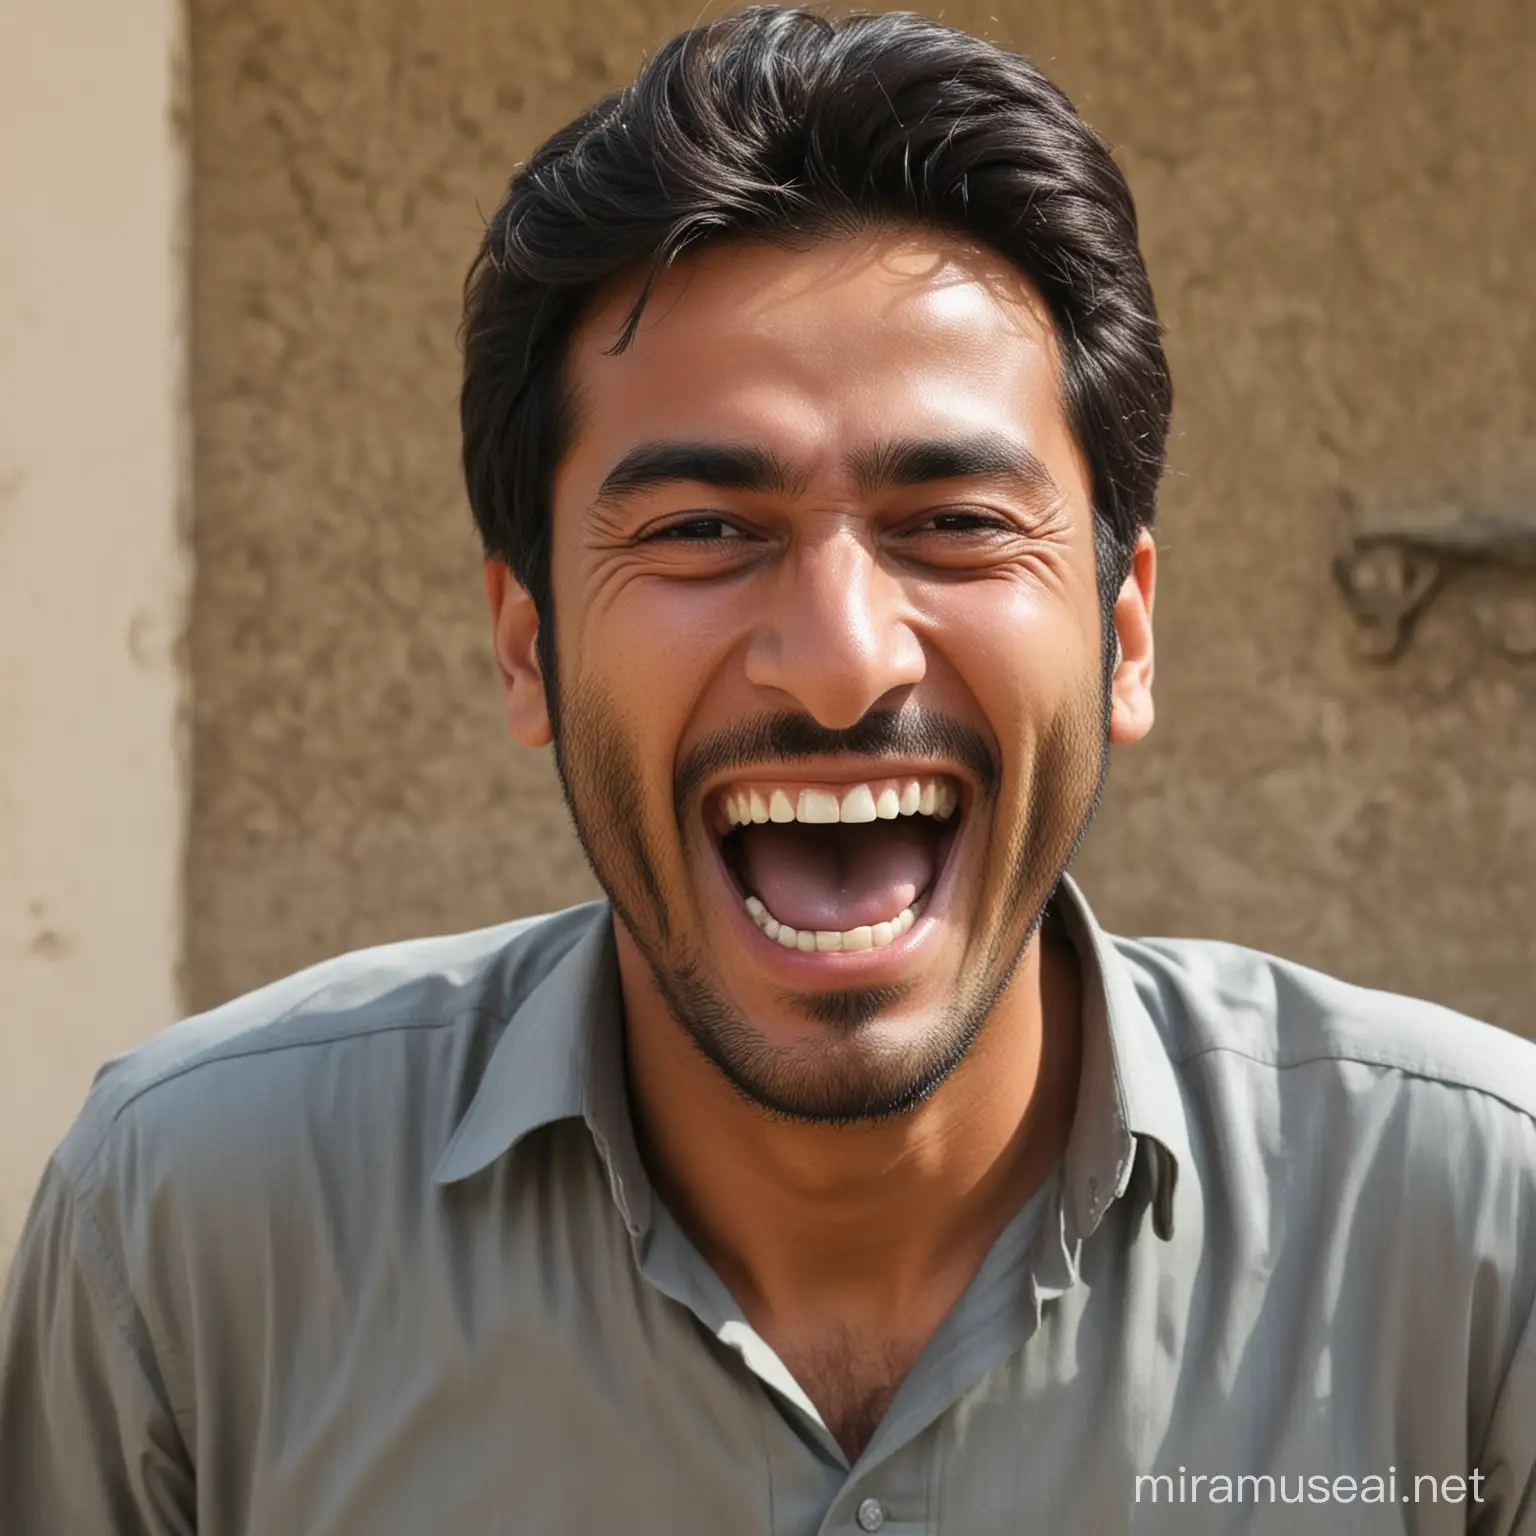 Joyful Pakistani Man Enjoying a Moment of Unrestrained Laughter